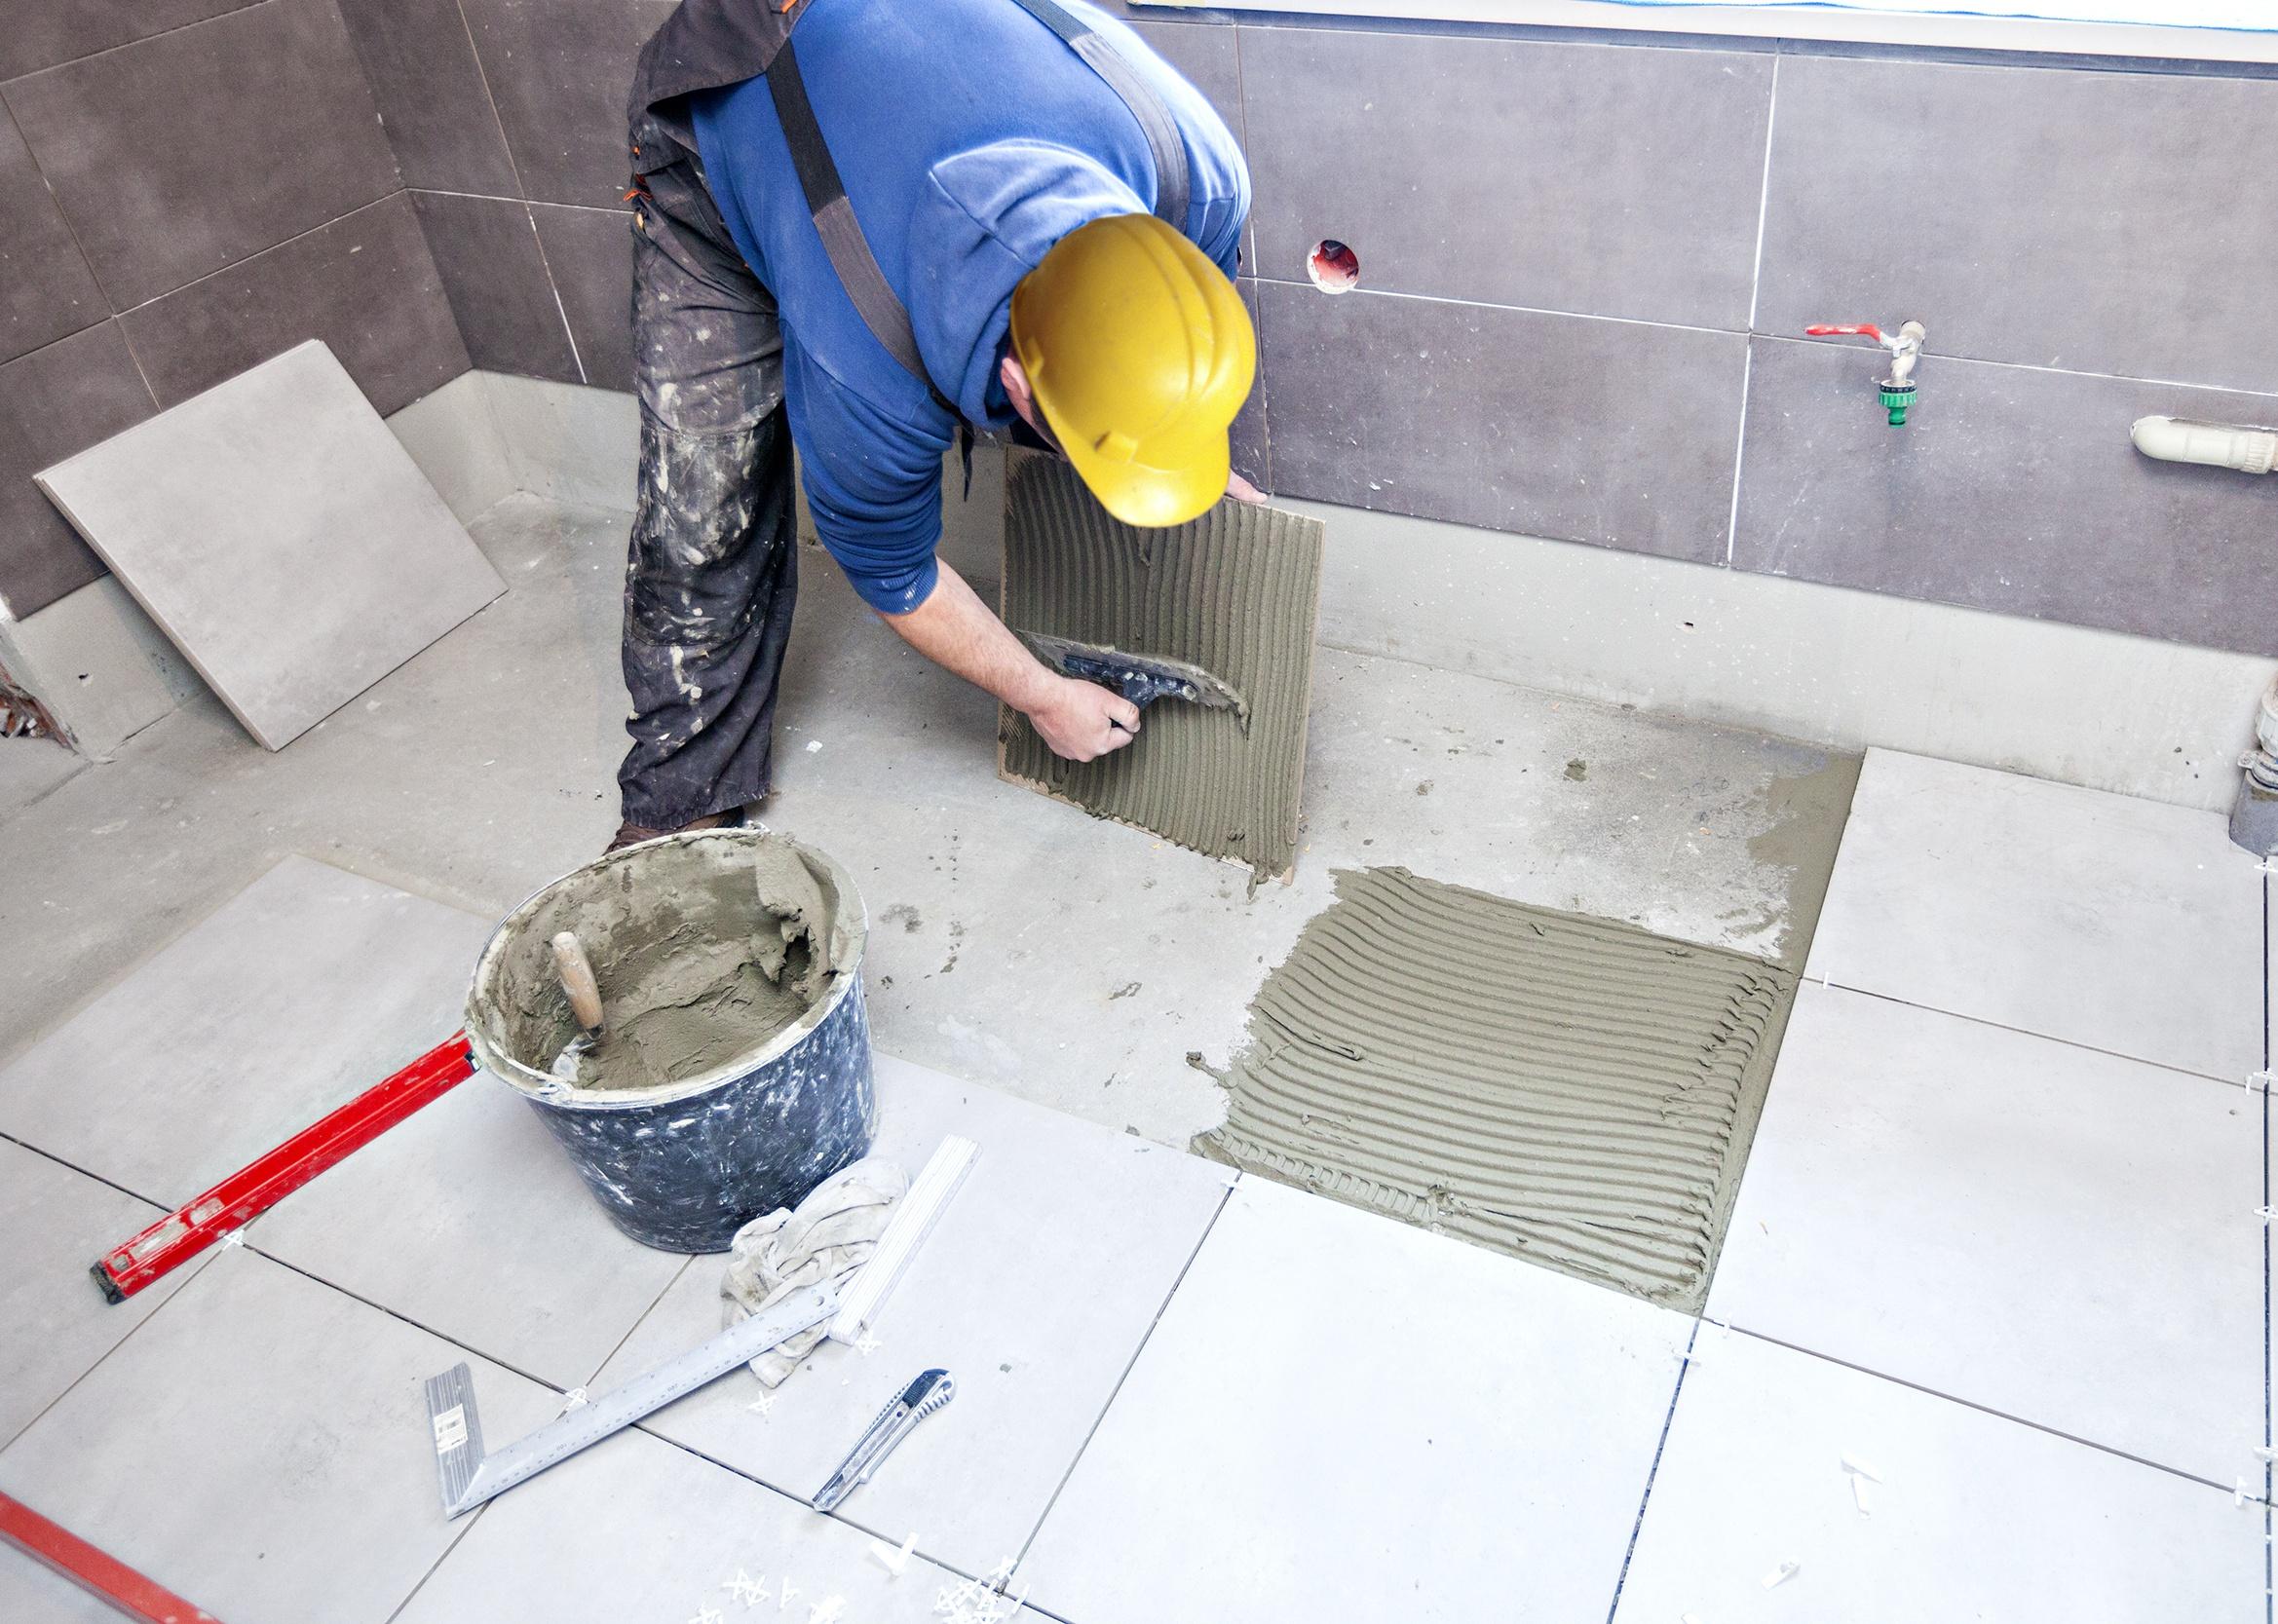 A tiler builder arranges the bathroom ceramics.